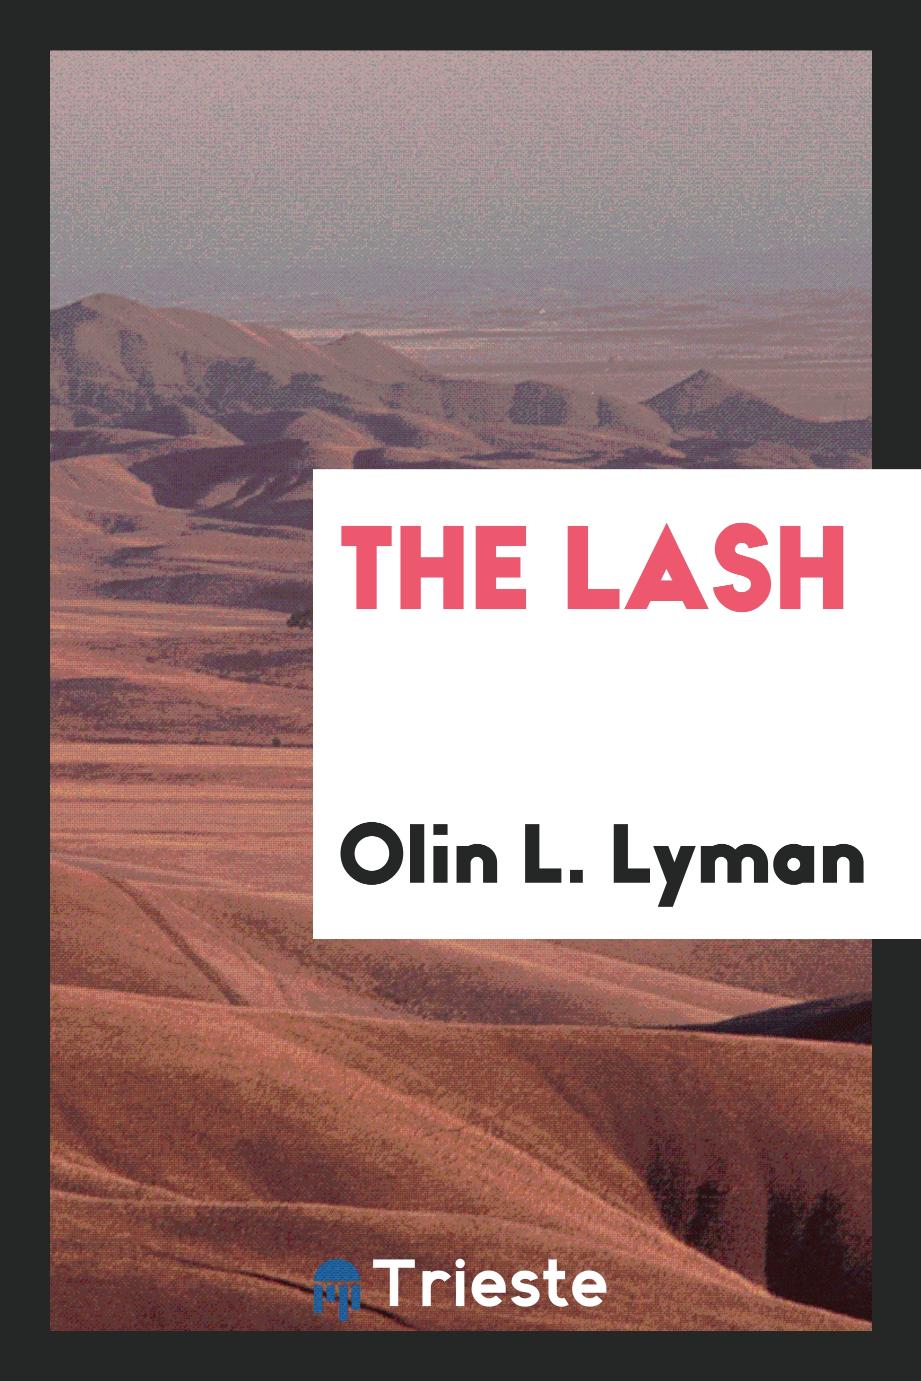 The lash